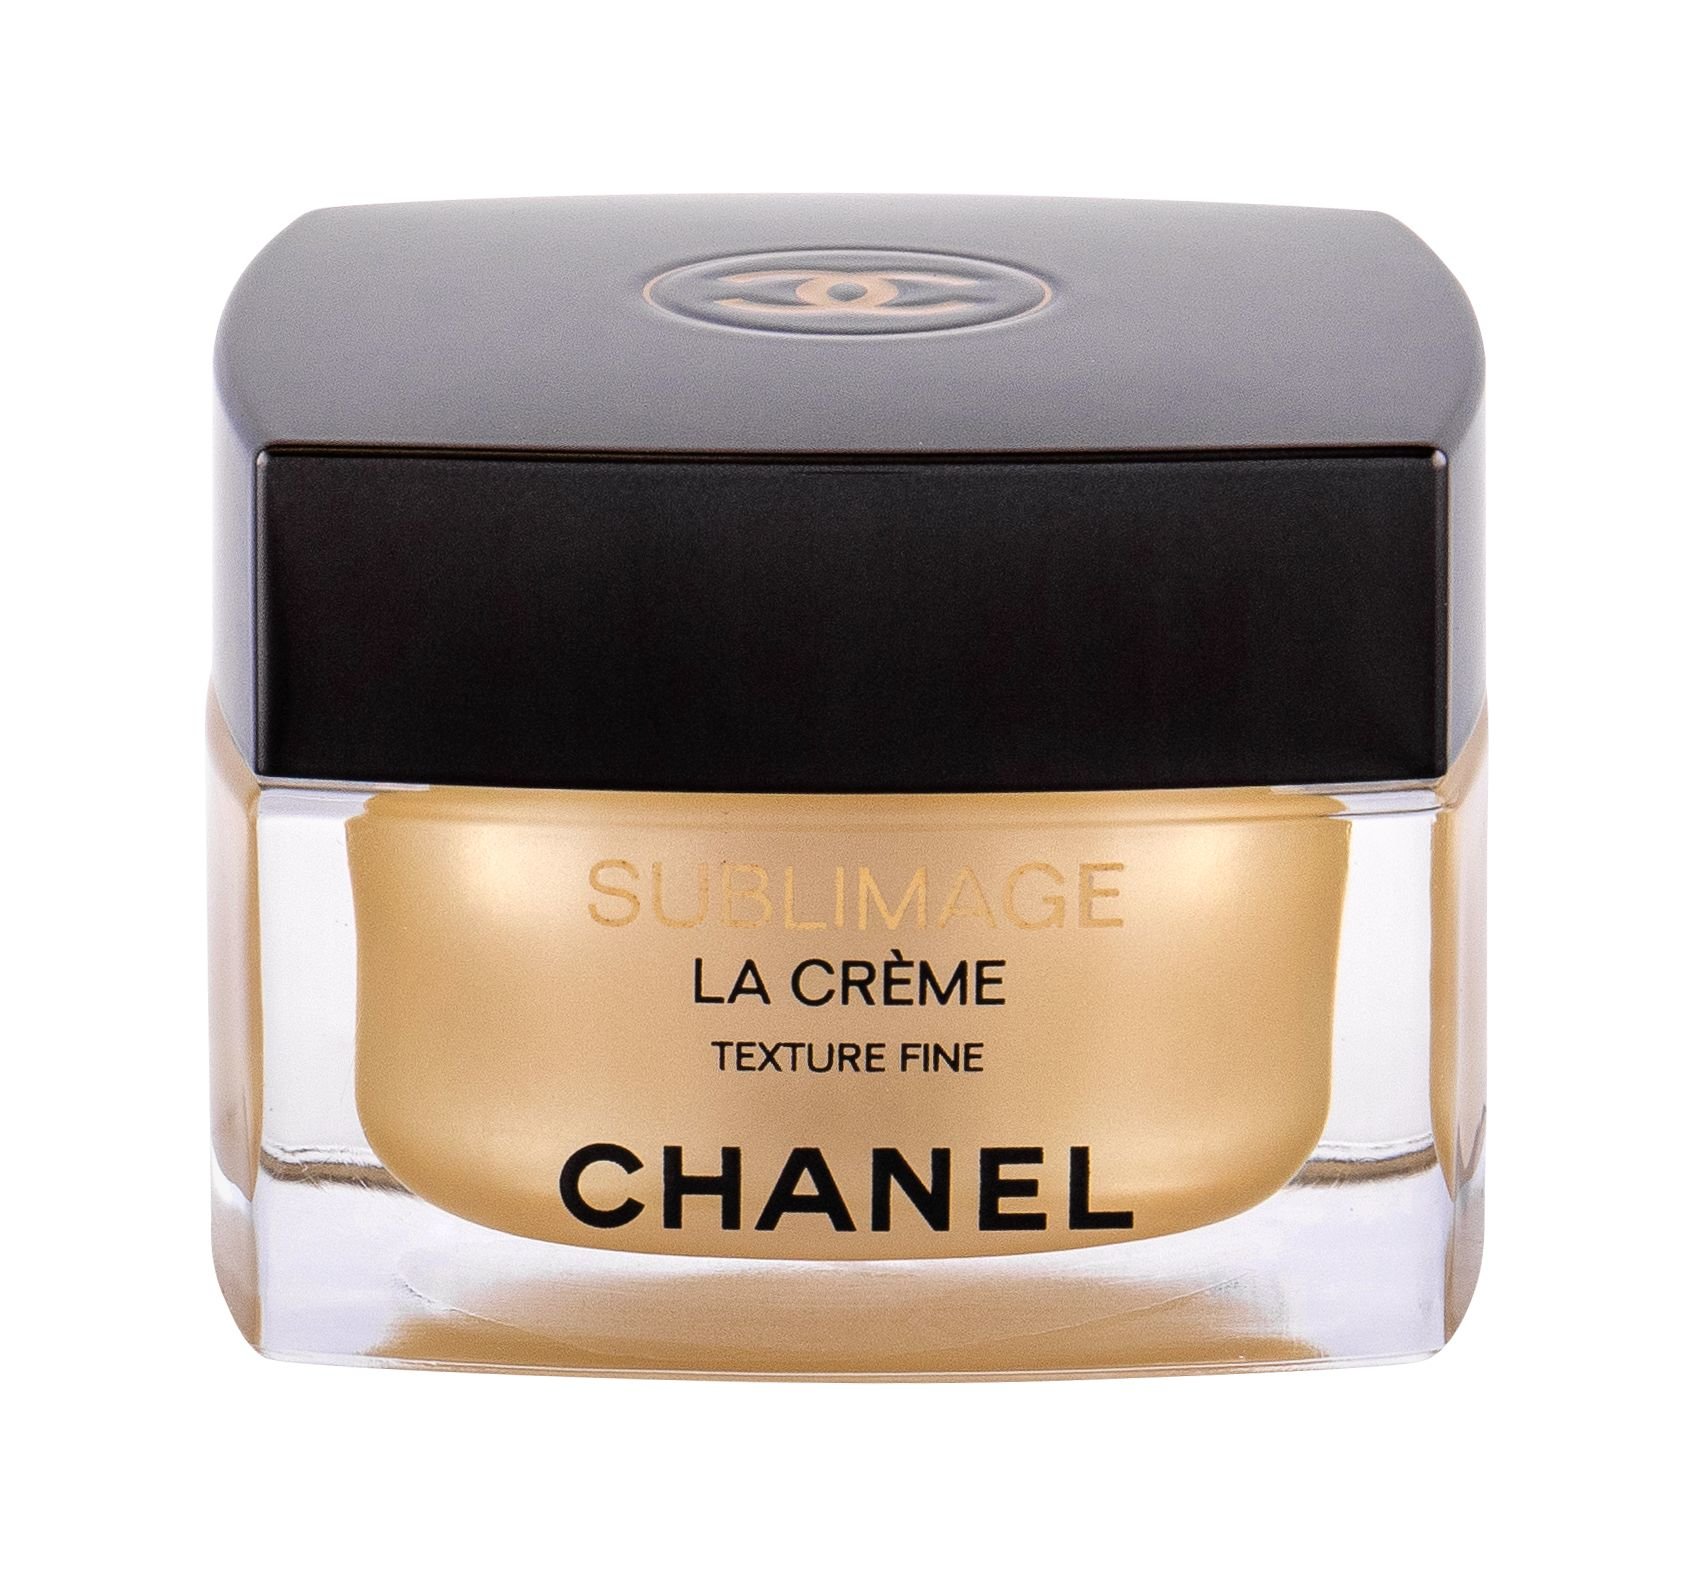 Chanel Sublimage Ultimate Skin Regeneration Cream